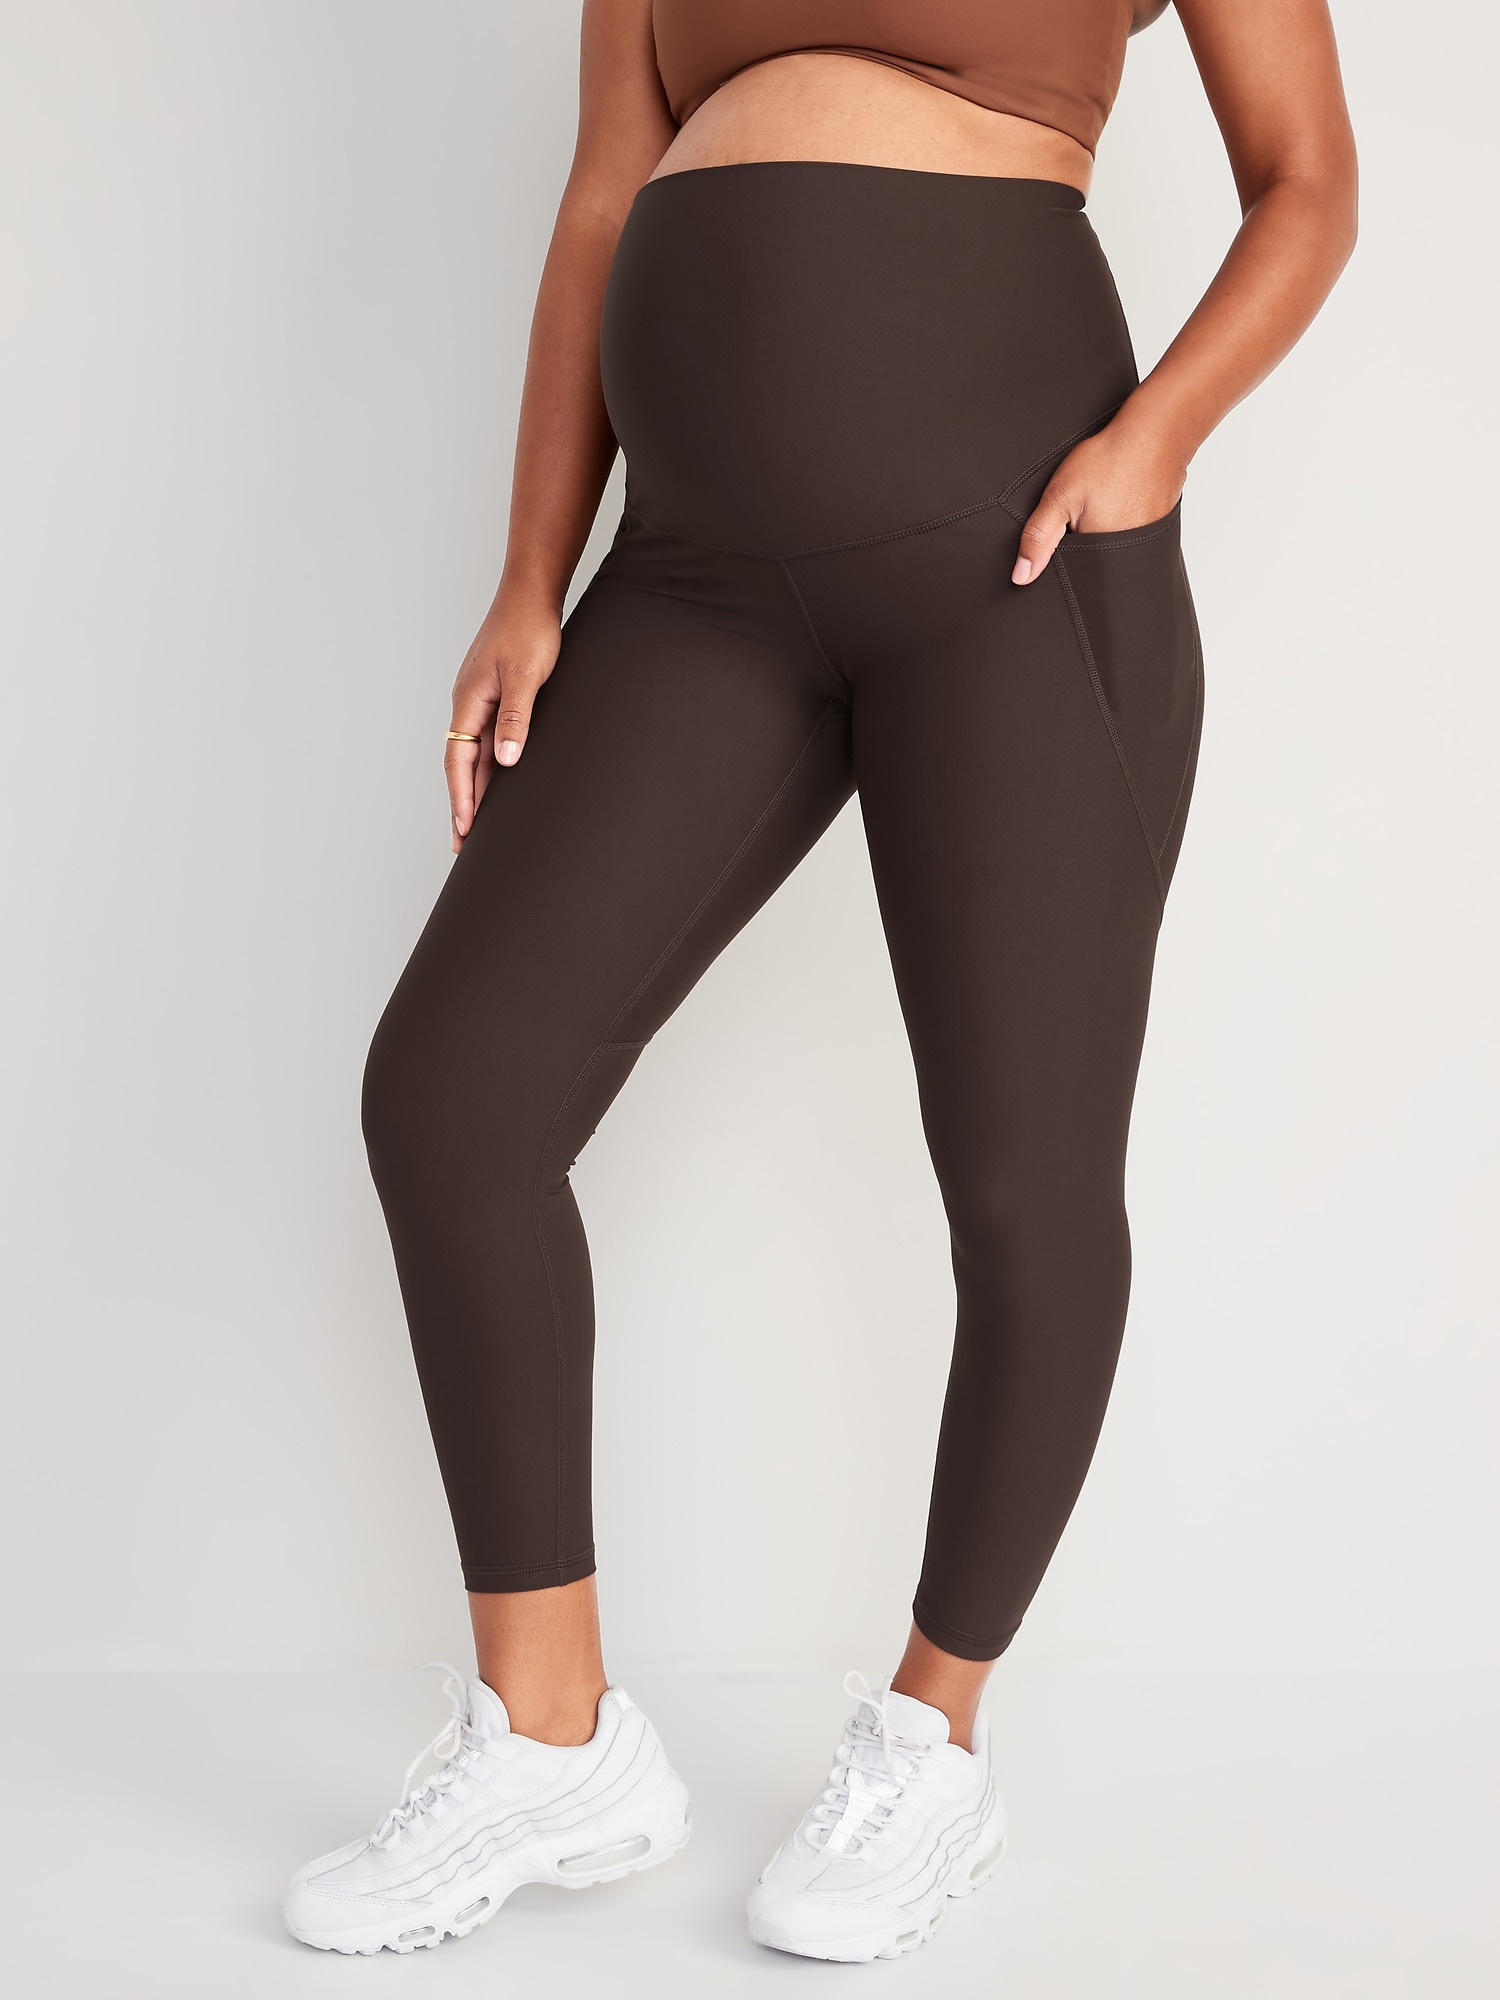 Maternity Activewear Leggings Full length with mid waist panel